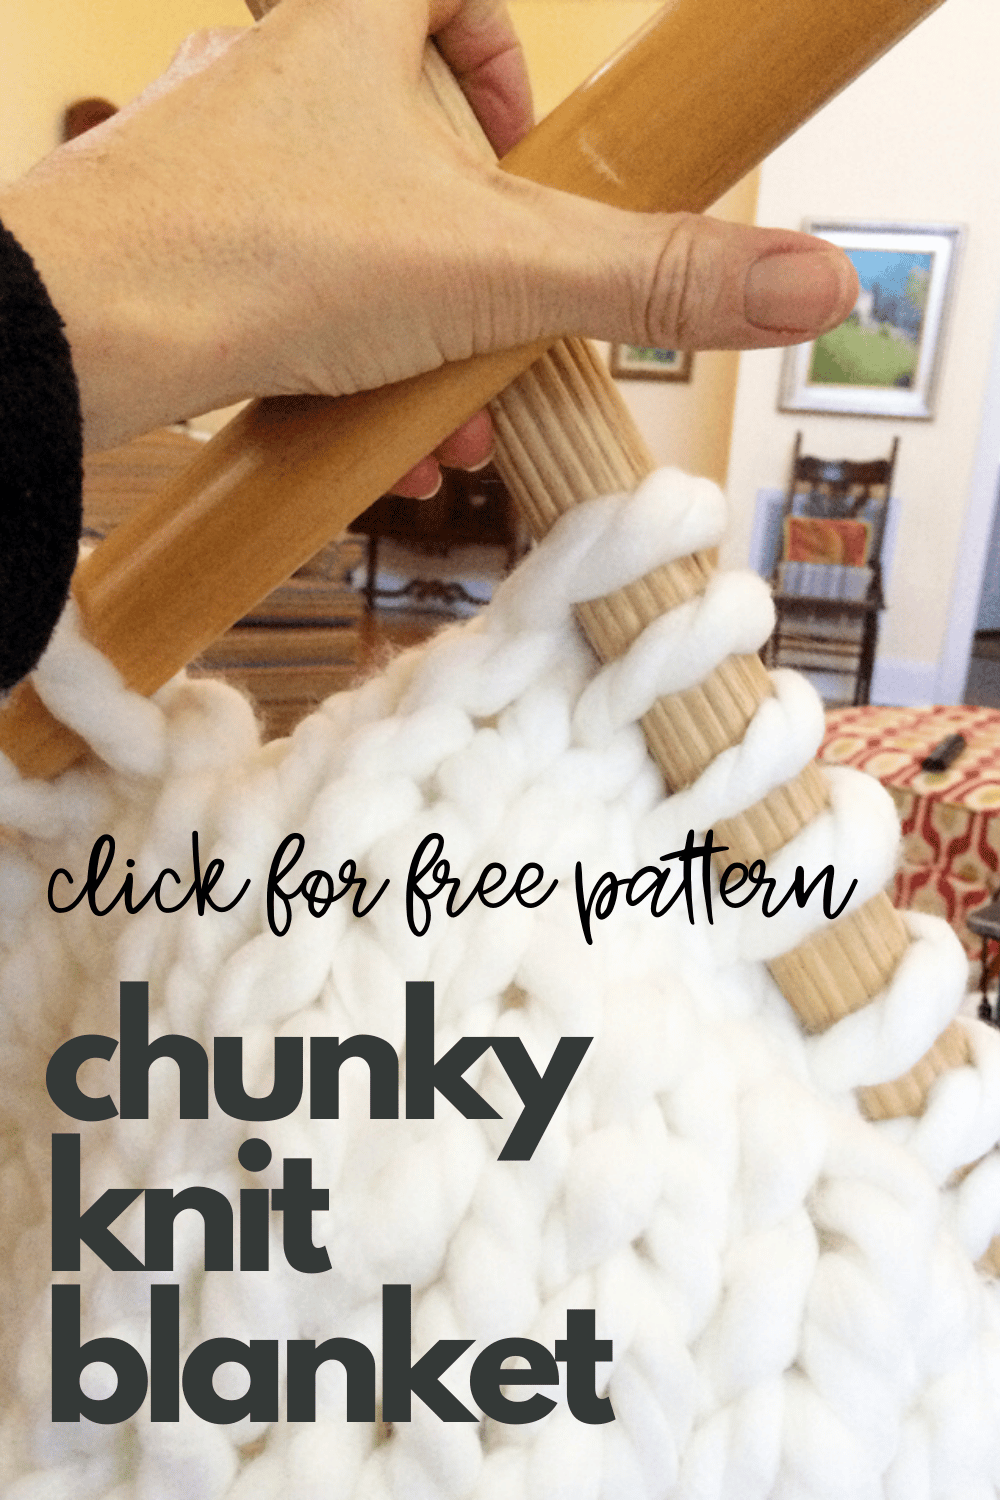 chunky knit blanket on knitting needles